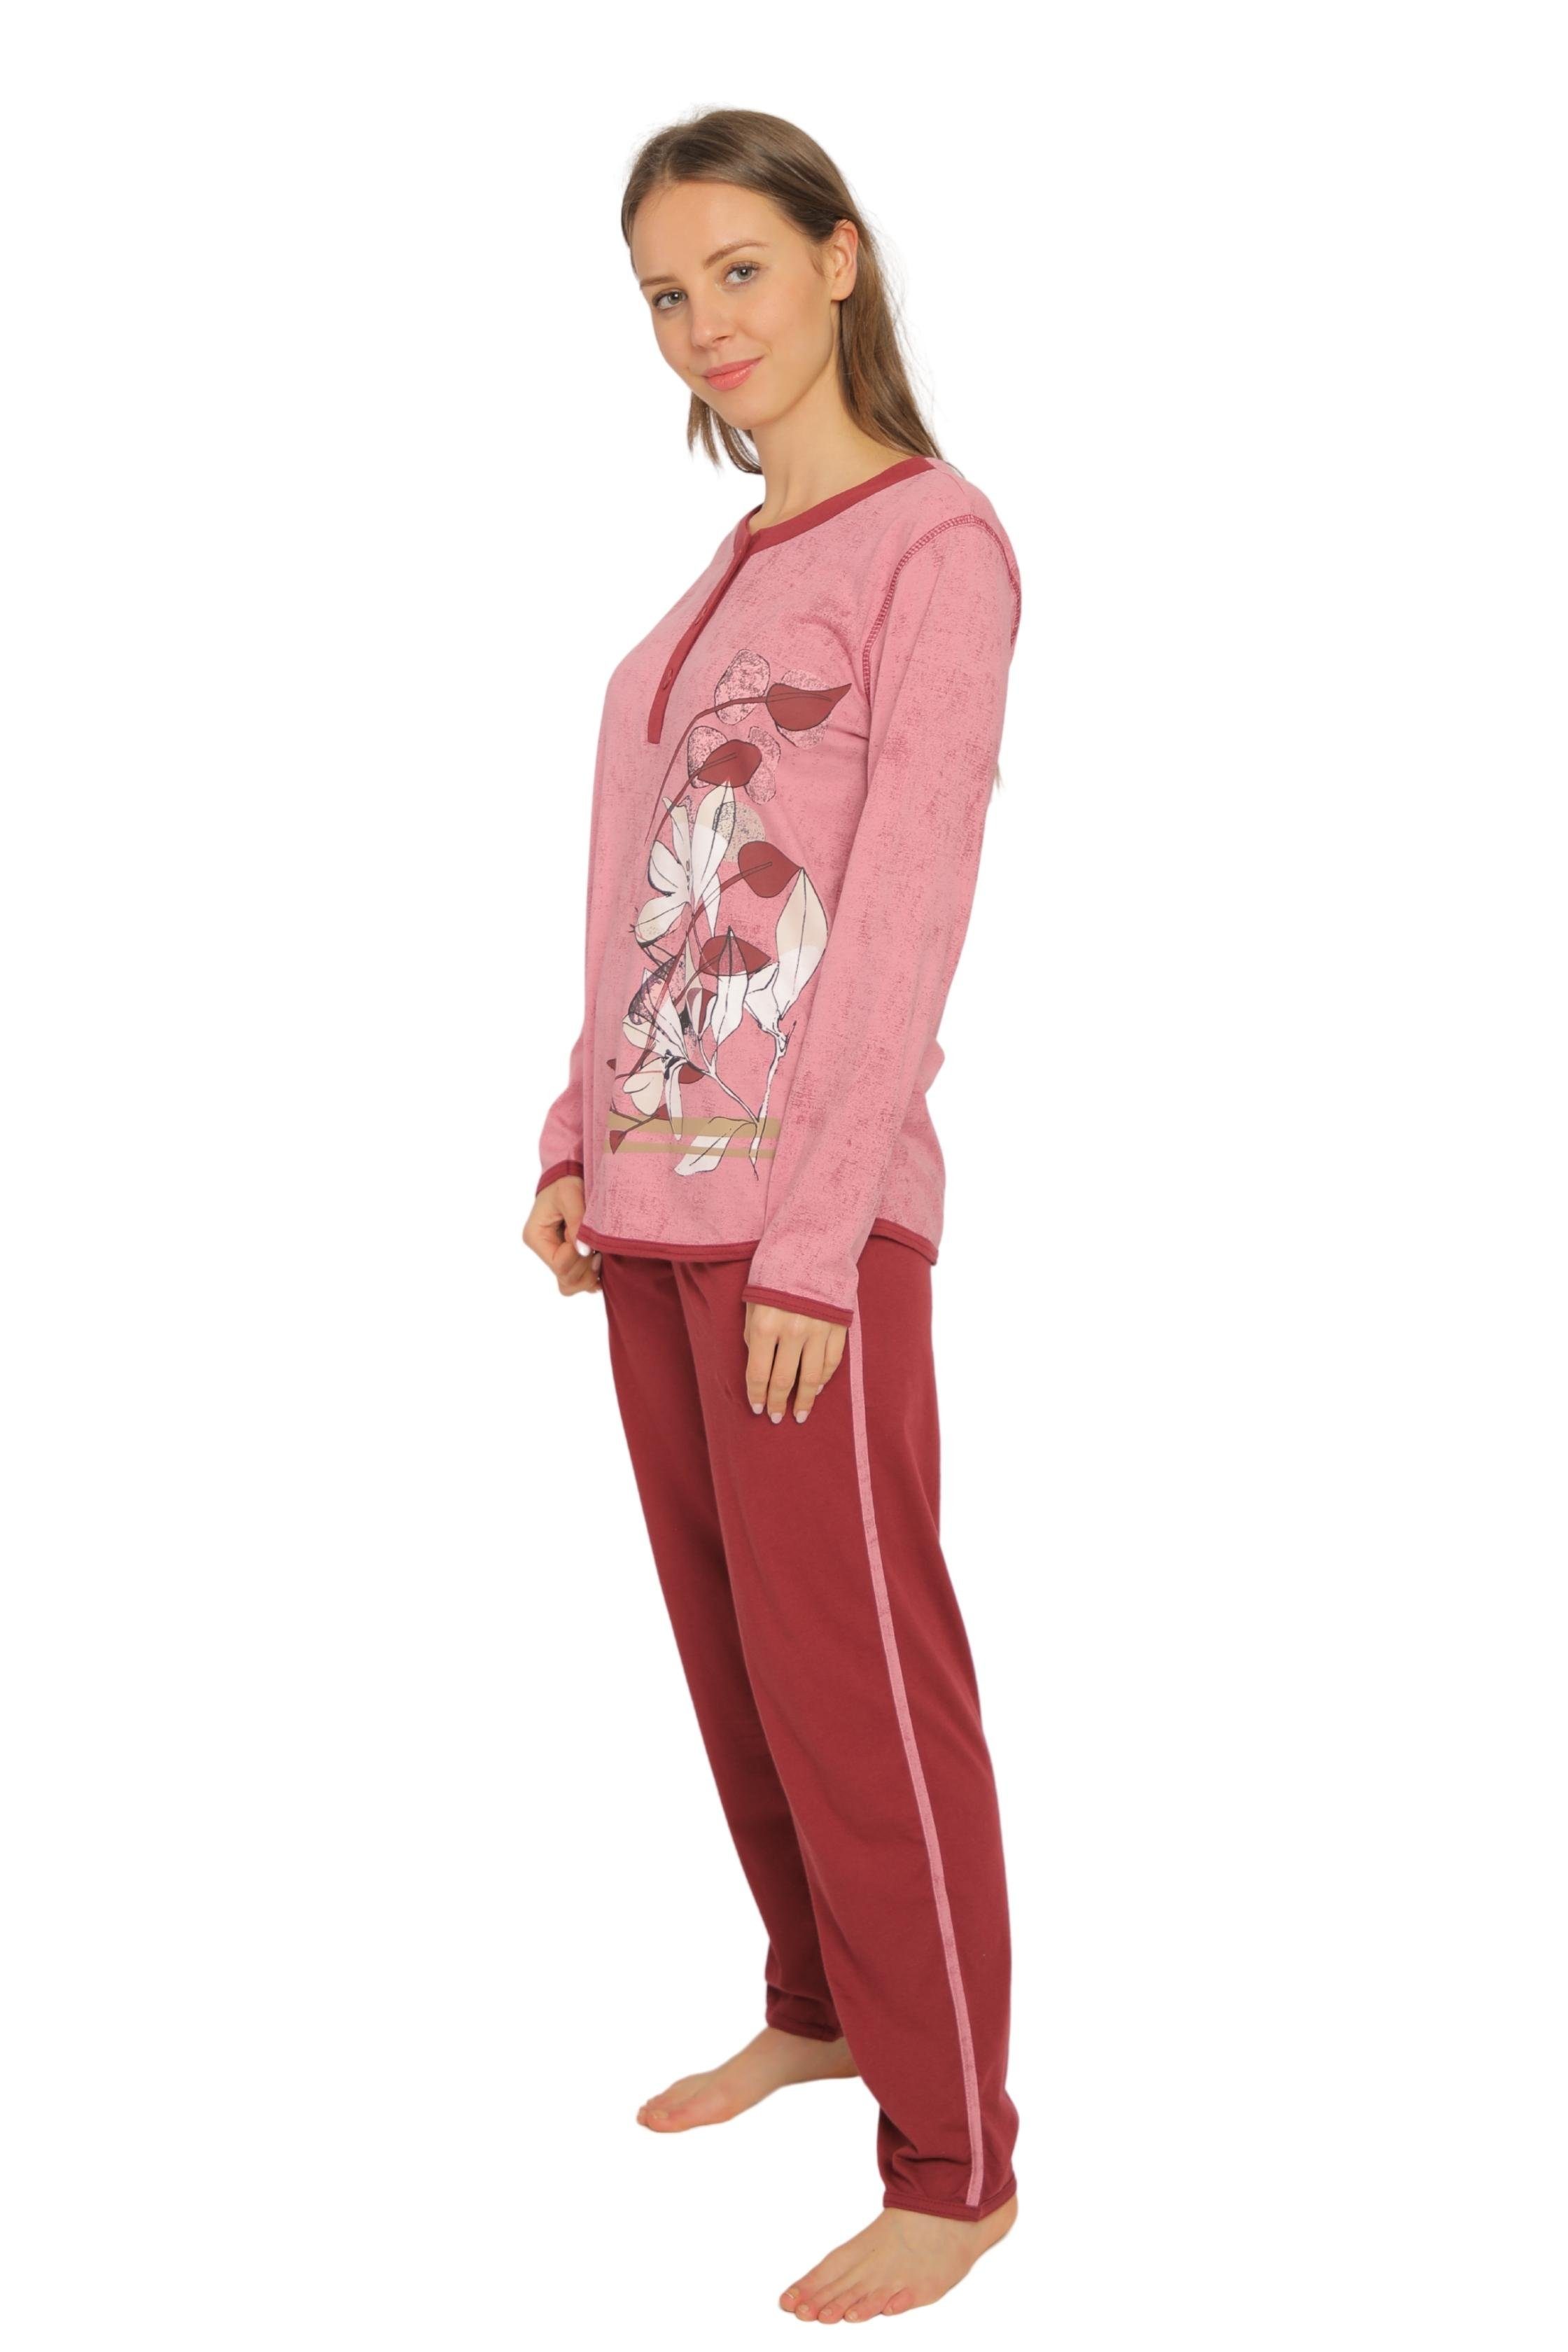 Consult-Tex Pyjama Damen Pyjama, Schlafanzug, Homewear Set DF419 (Packung) aus reiner Baumwolle-Jersey Qualität bordo | Pyjamas